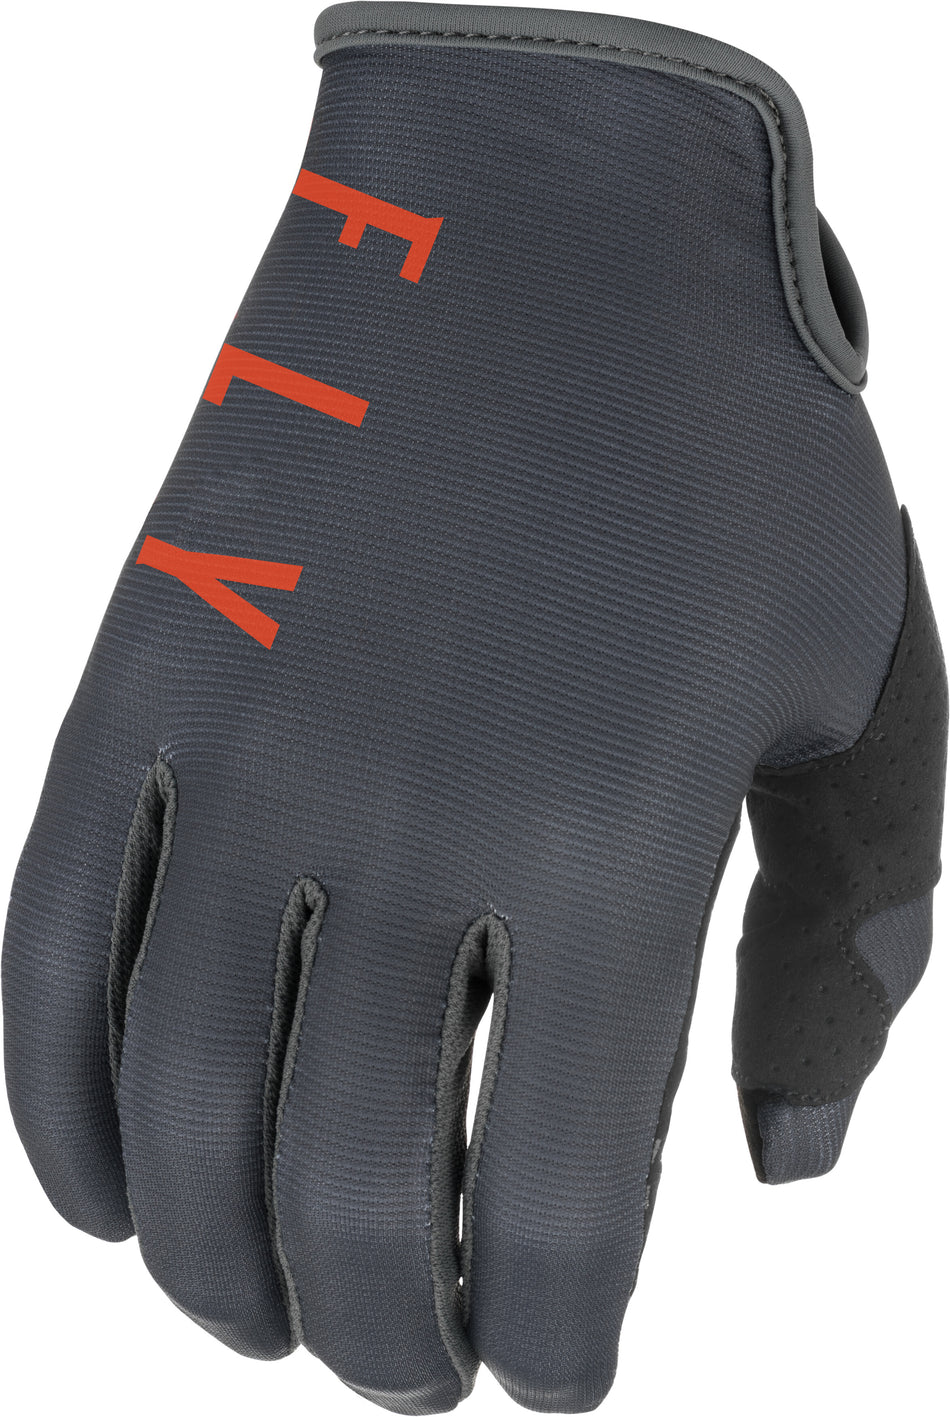 FLY RACING Lite Gloves Grey/Orange/Black Sz 11 374-71611